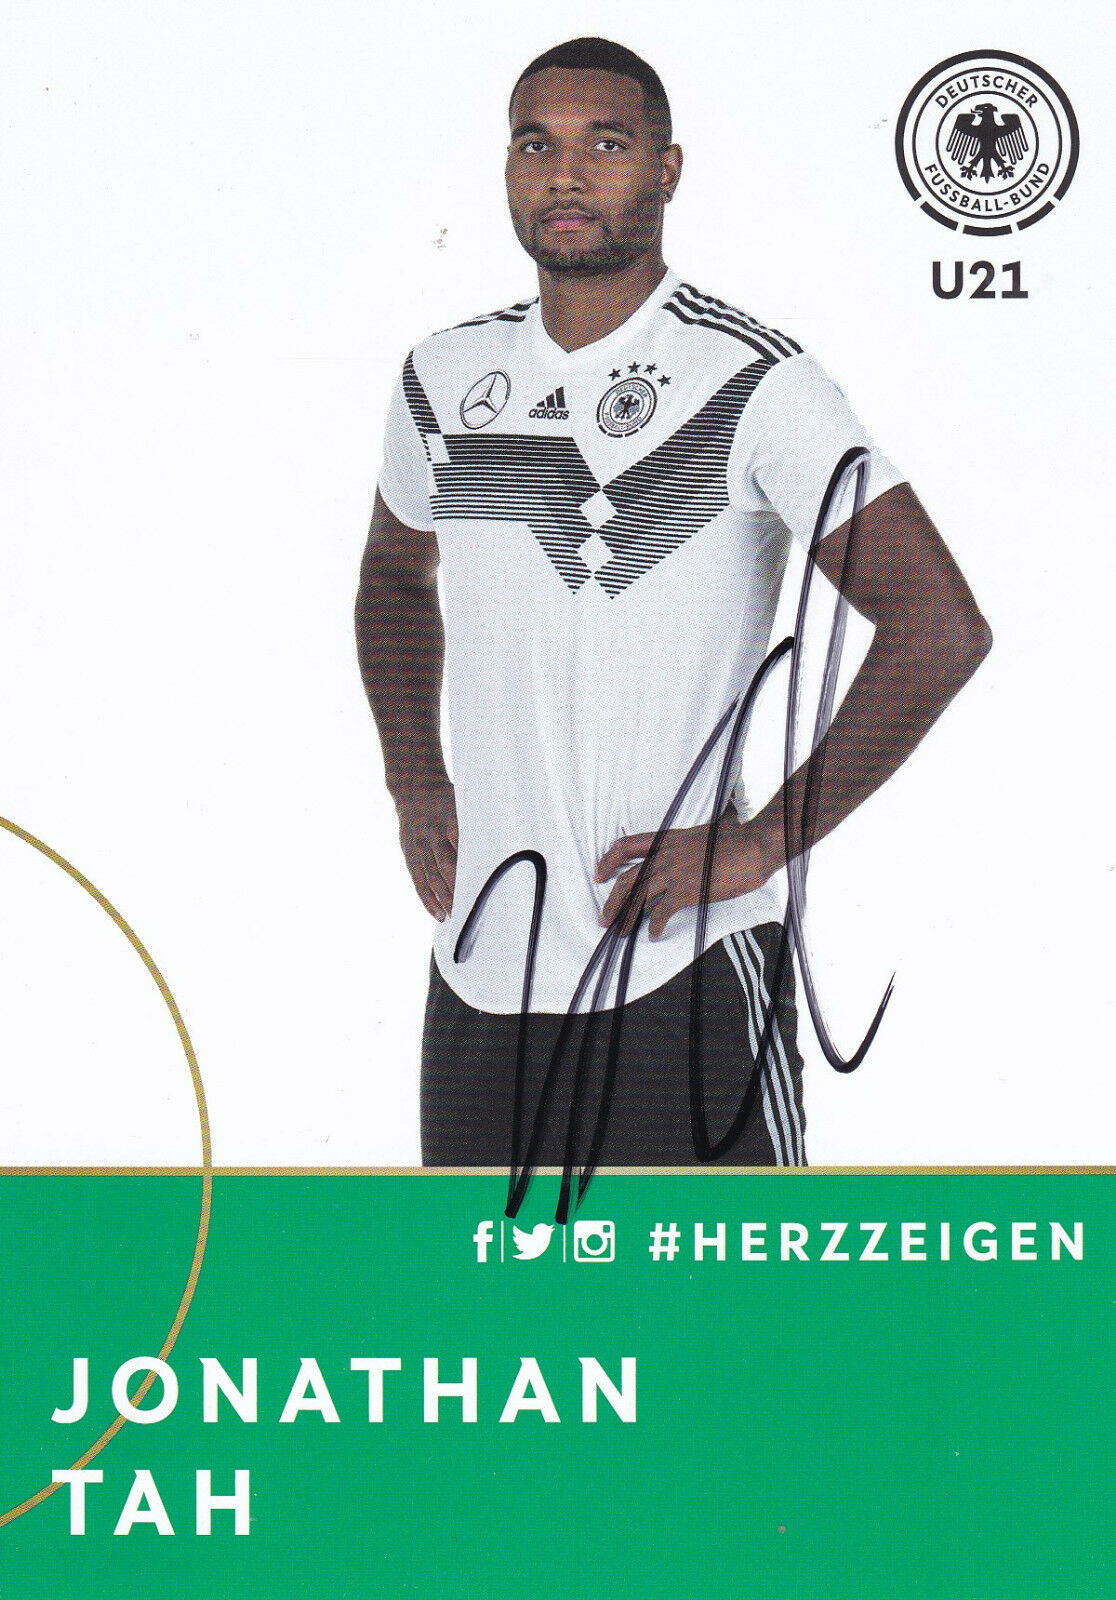 Janni Serra 2 AK DFB U21 Autogrammkarte 2019-20 original handsigniert